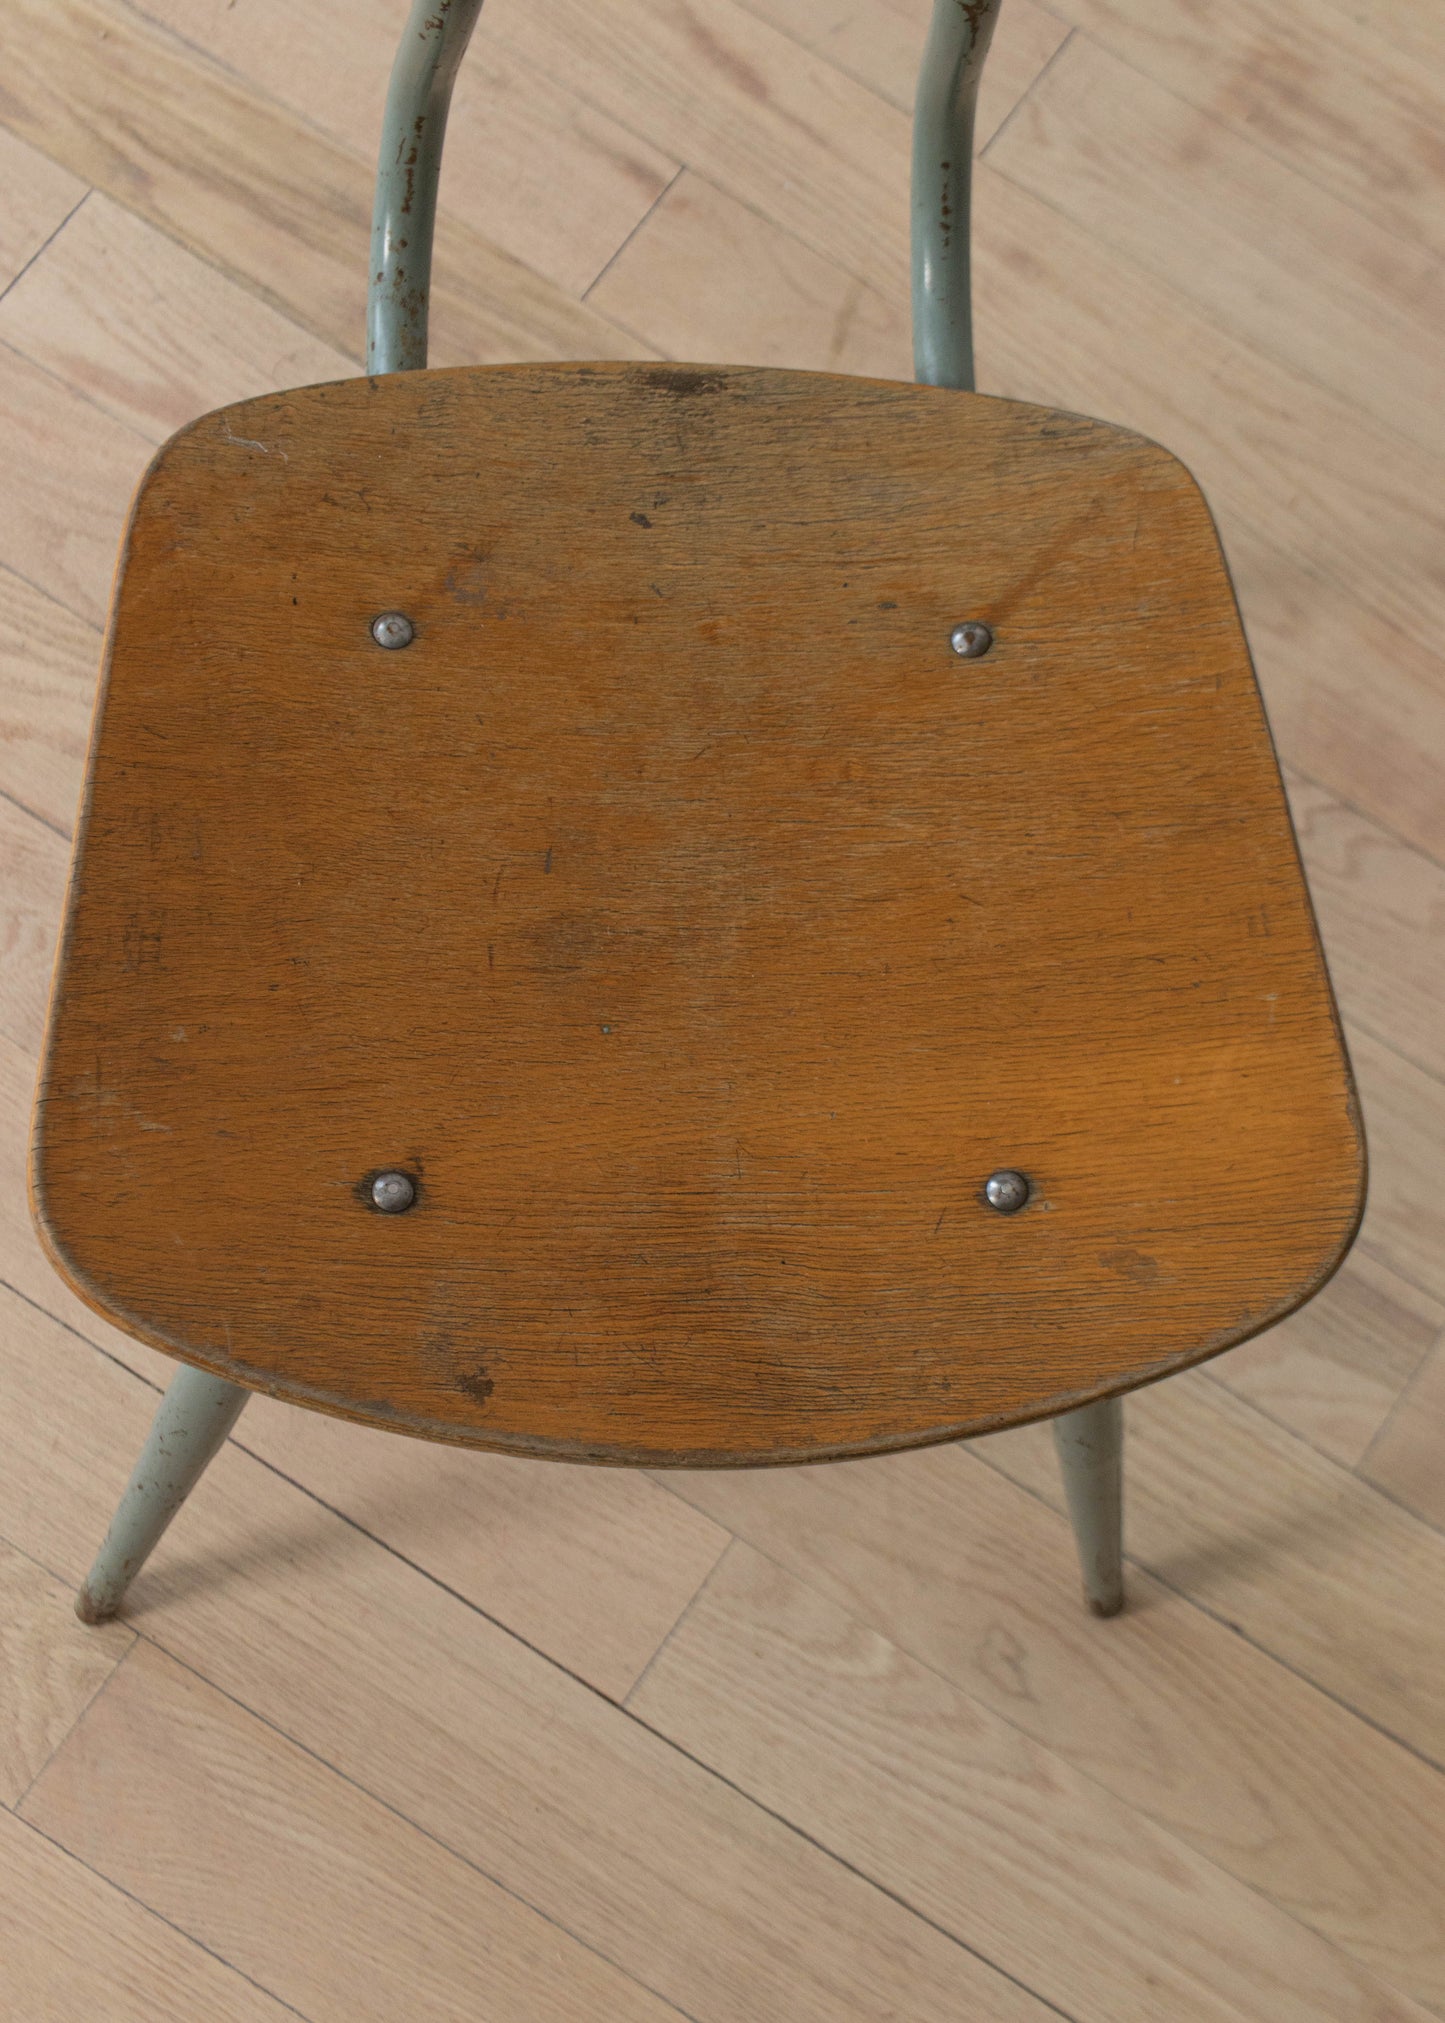 Vintage 1960s/1970s Mid-Century School Chair